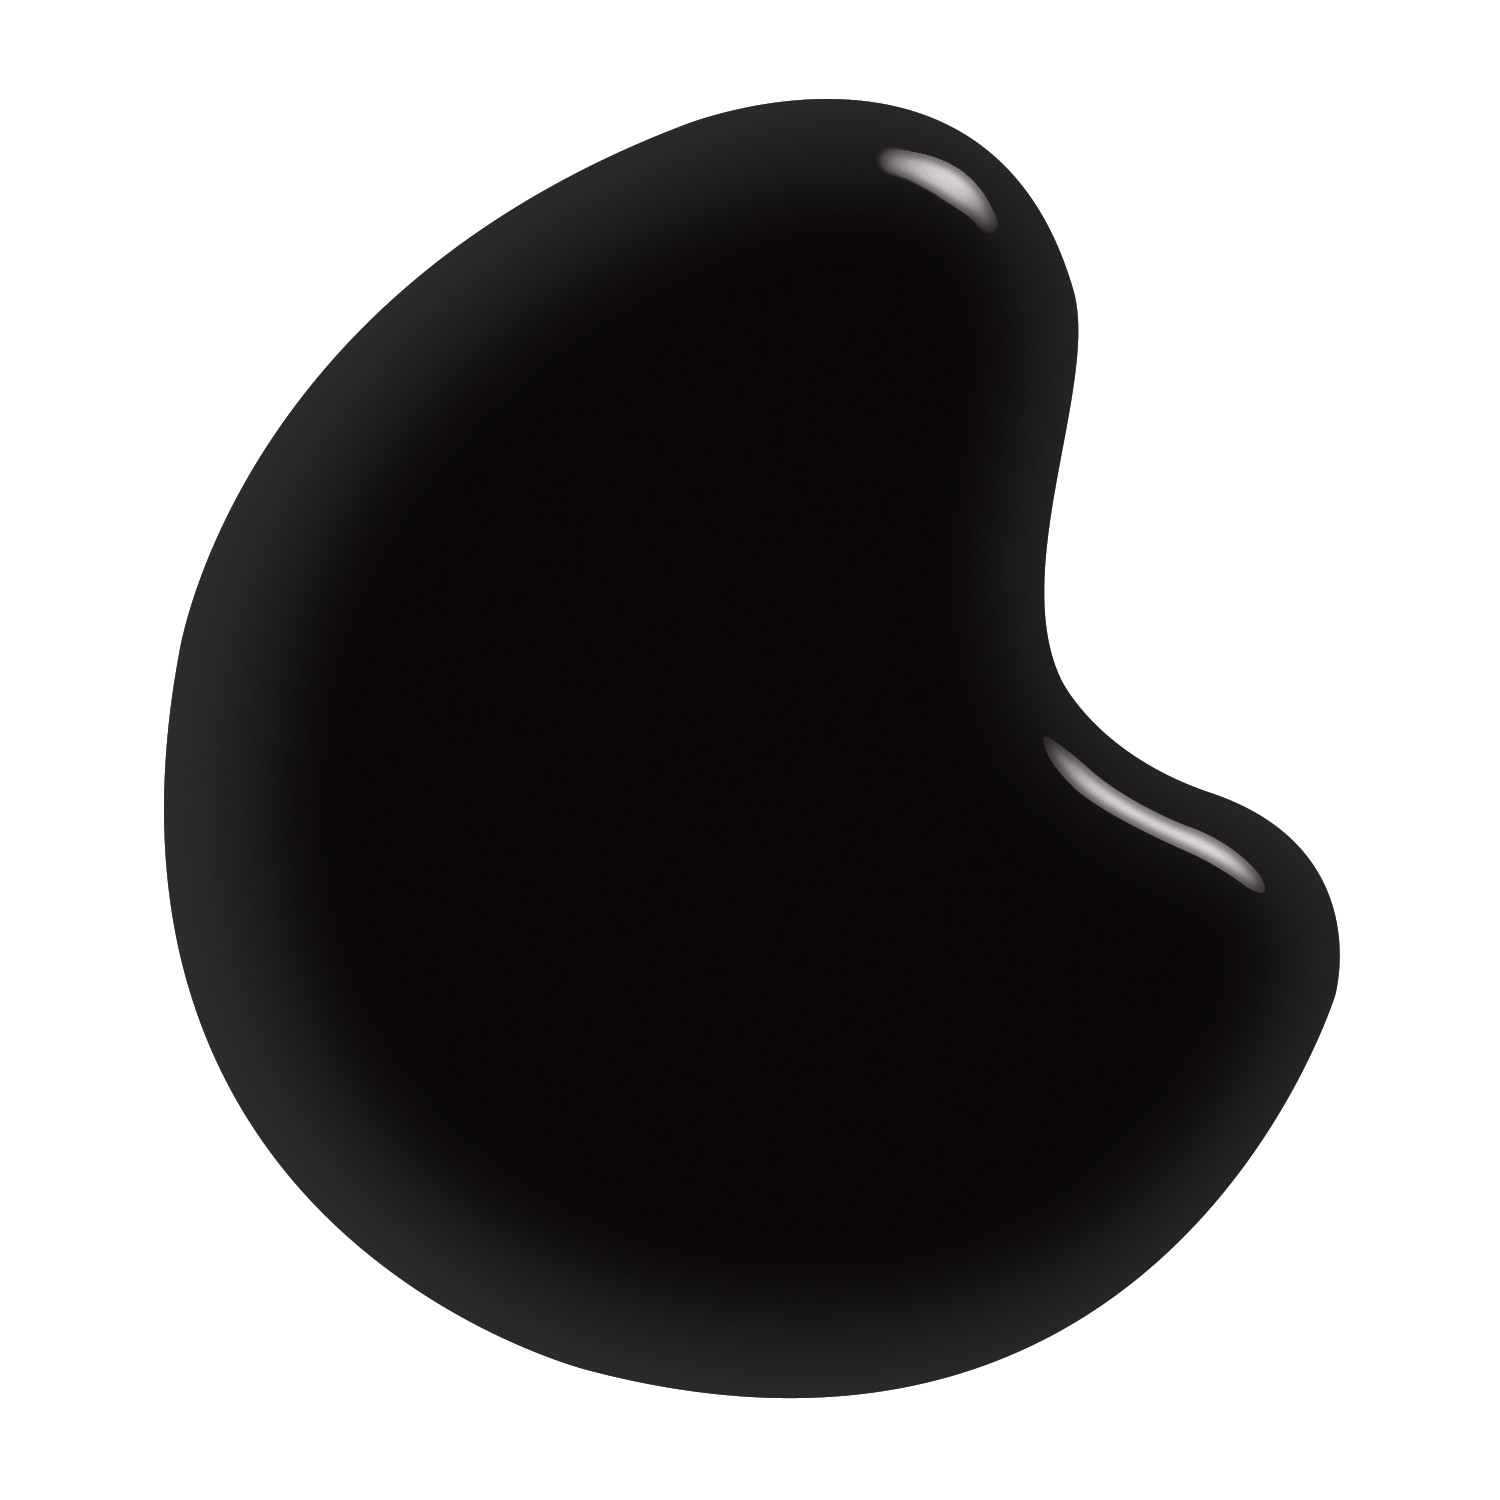 Sally Hansen Insta-Dri Nail Polish, Black to Black, 0.31 fl oz, Quick Dry - image 3 of 15